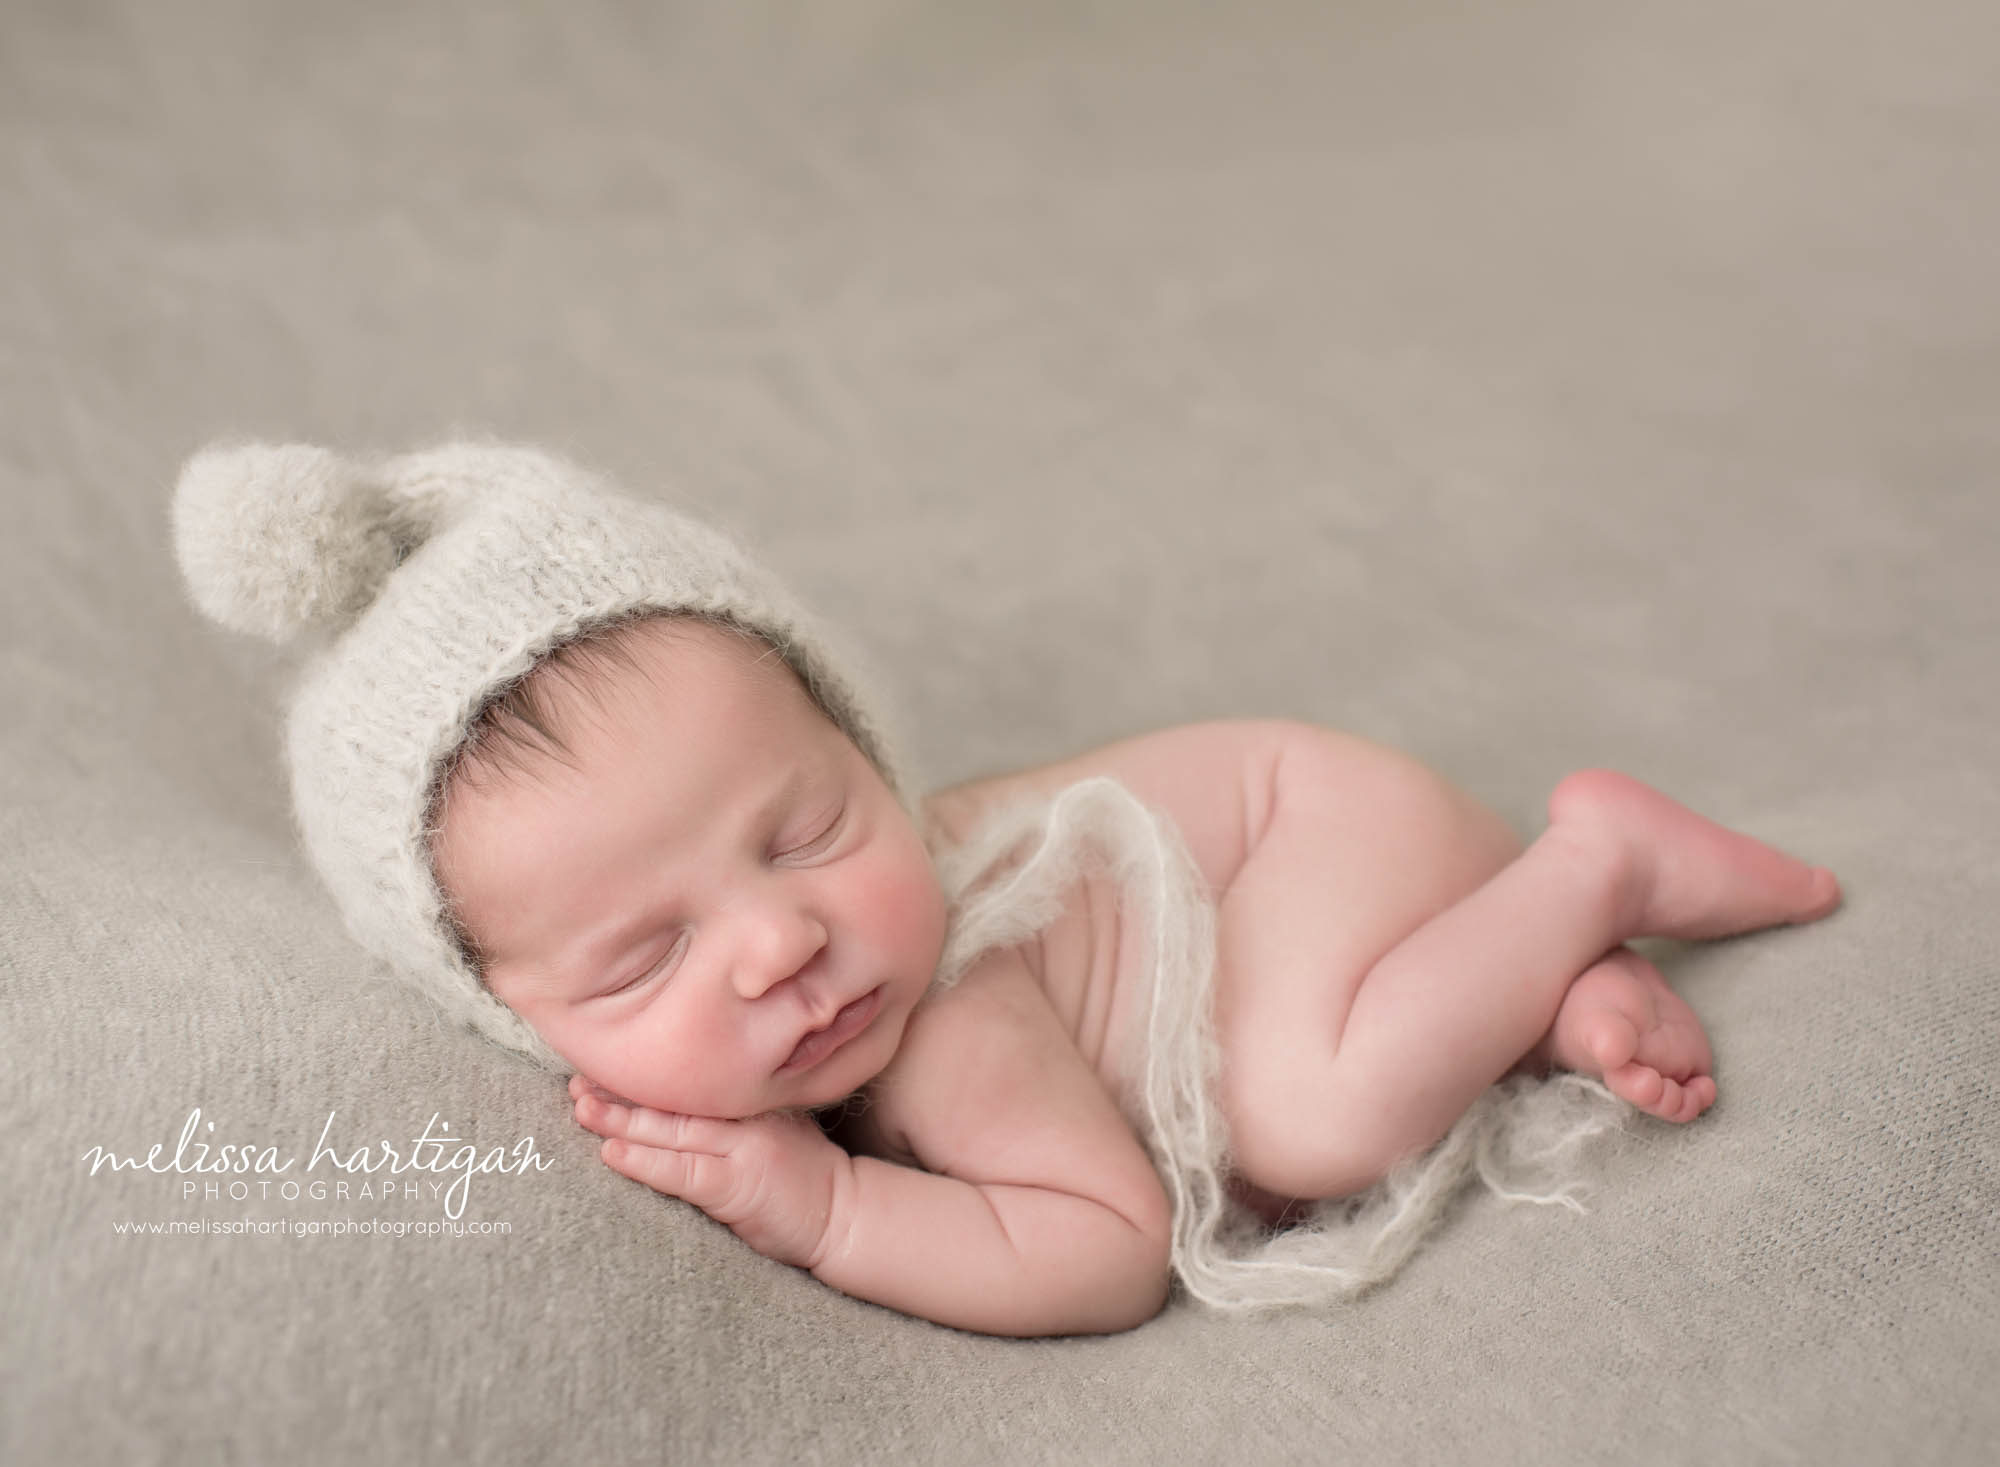 Newborn baby boy posed on side with pom newborn bonnet hat